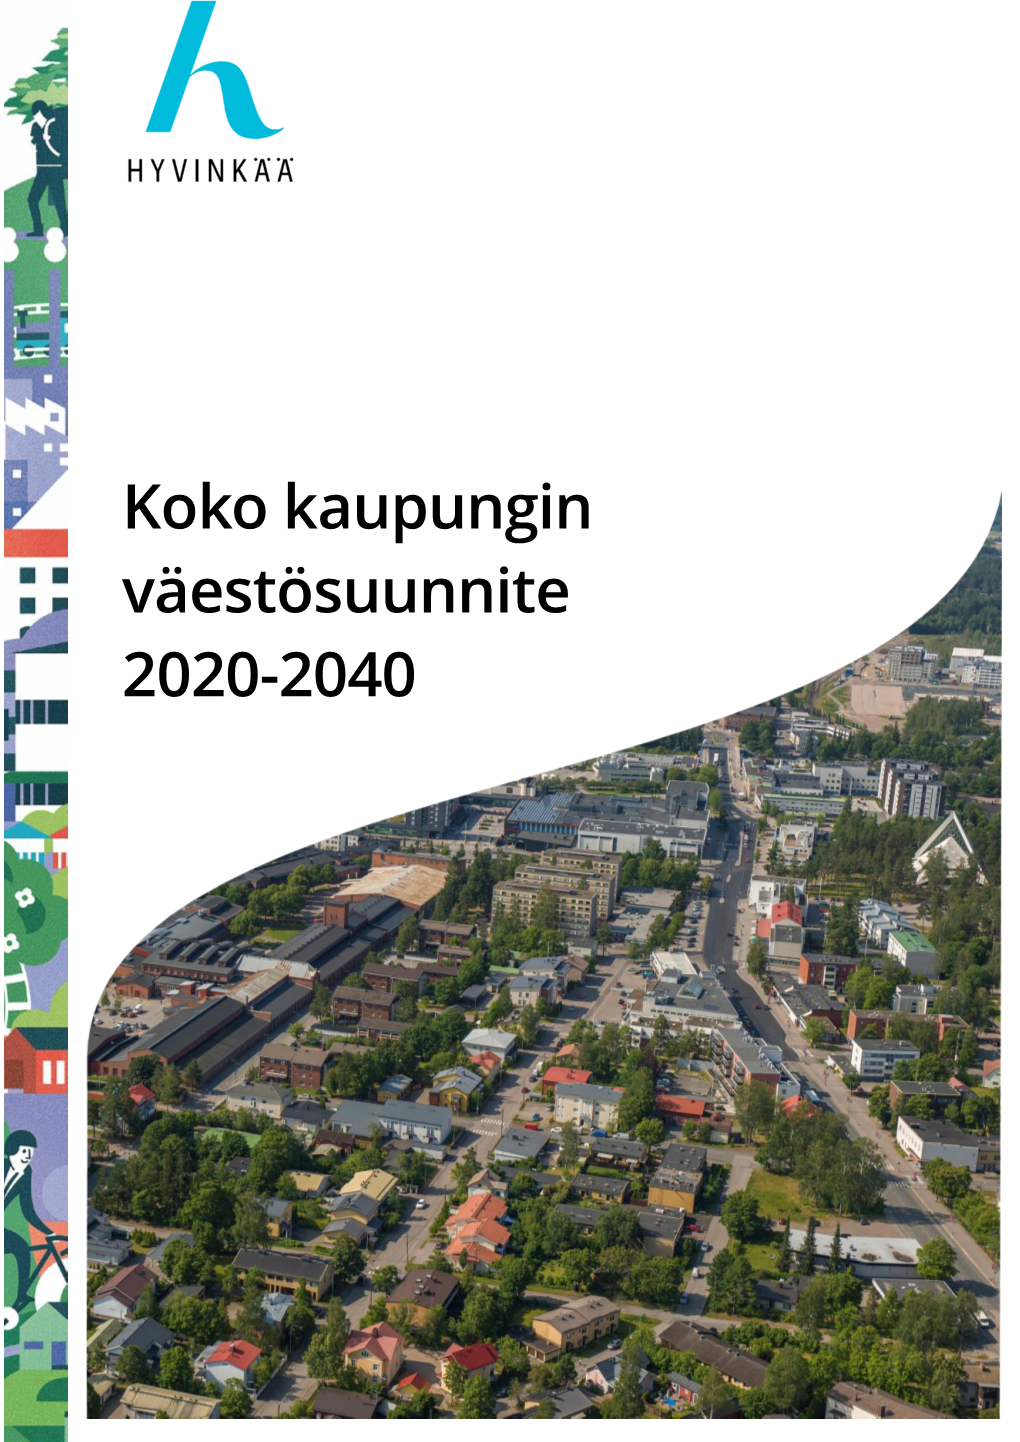 Koko Kaupungin Väestösuunnite 2020-2040